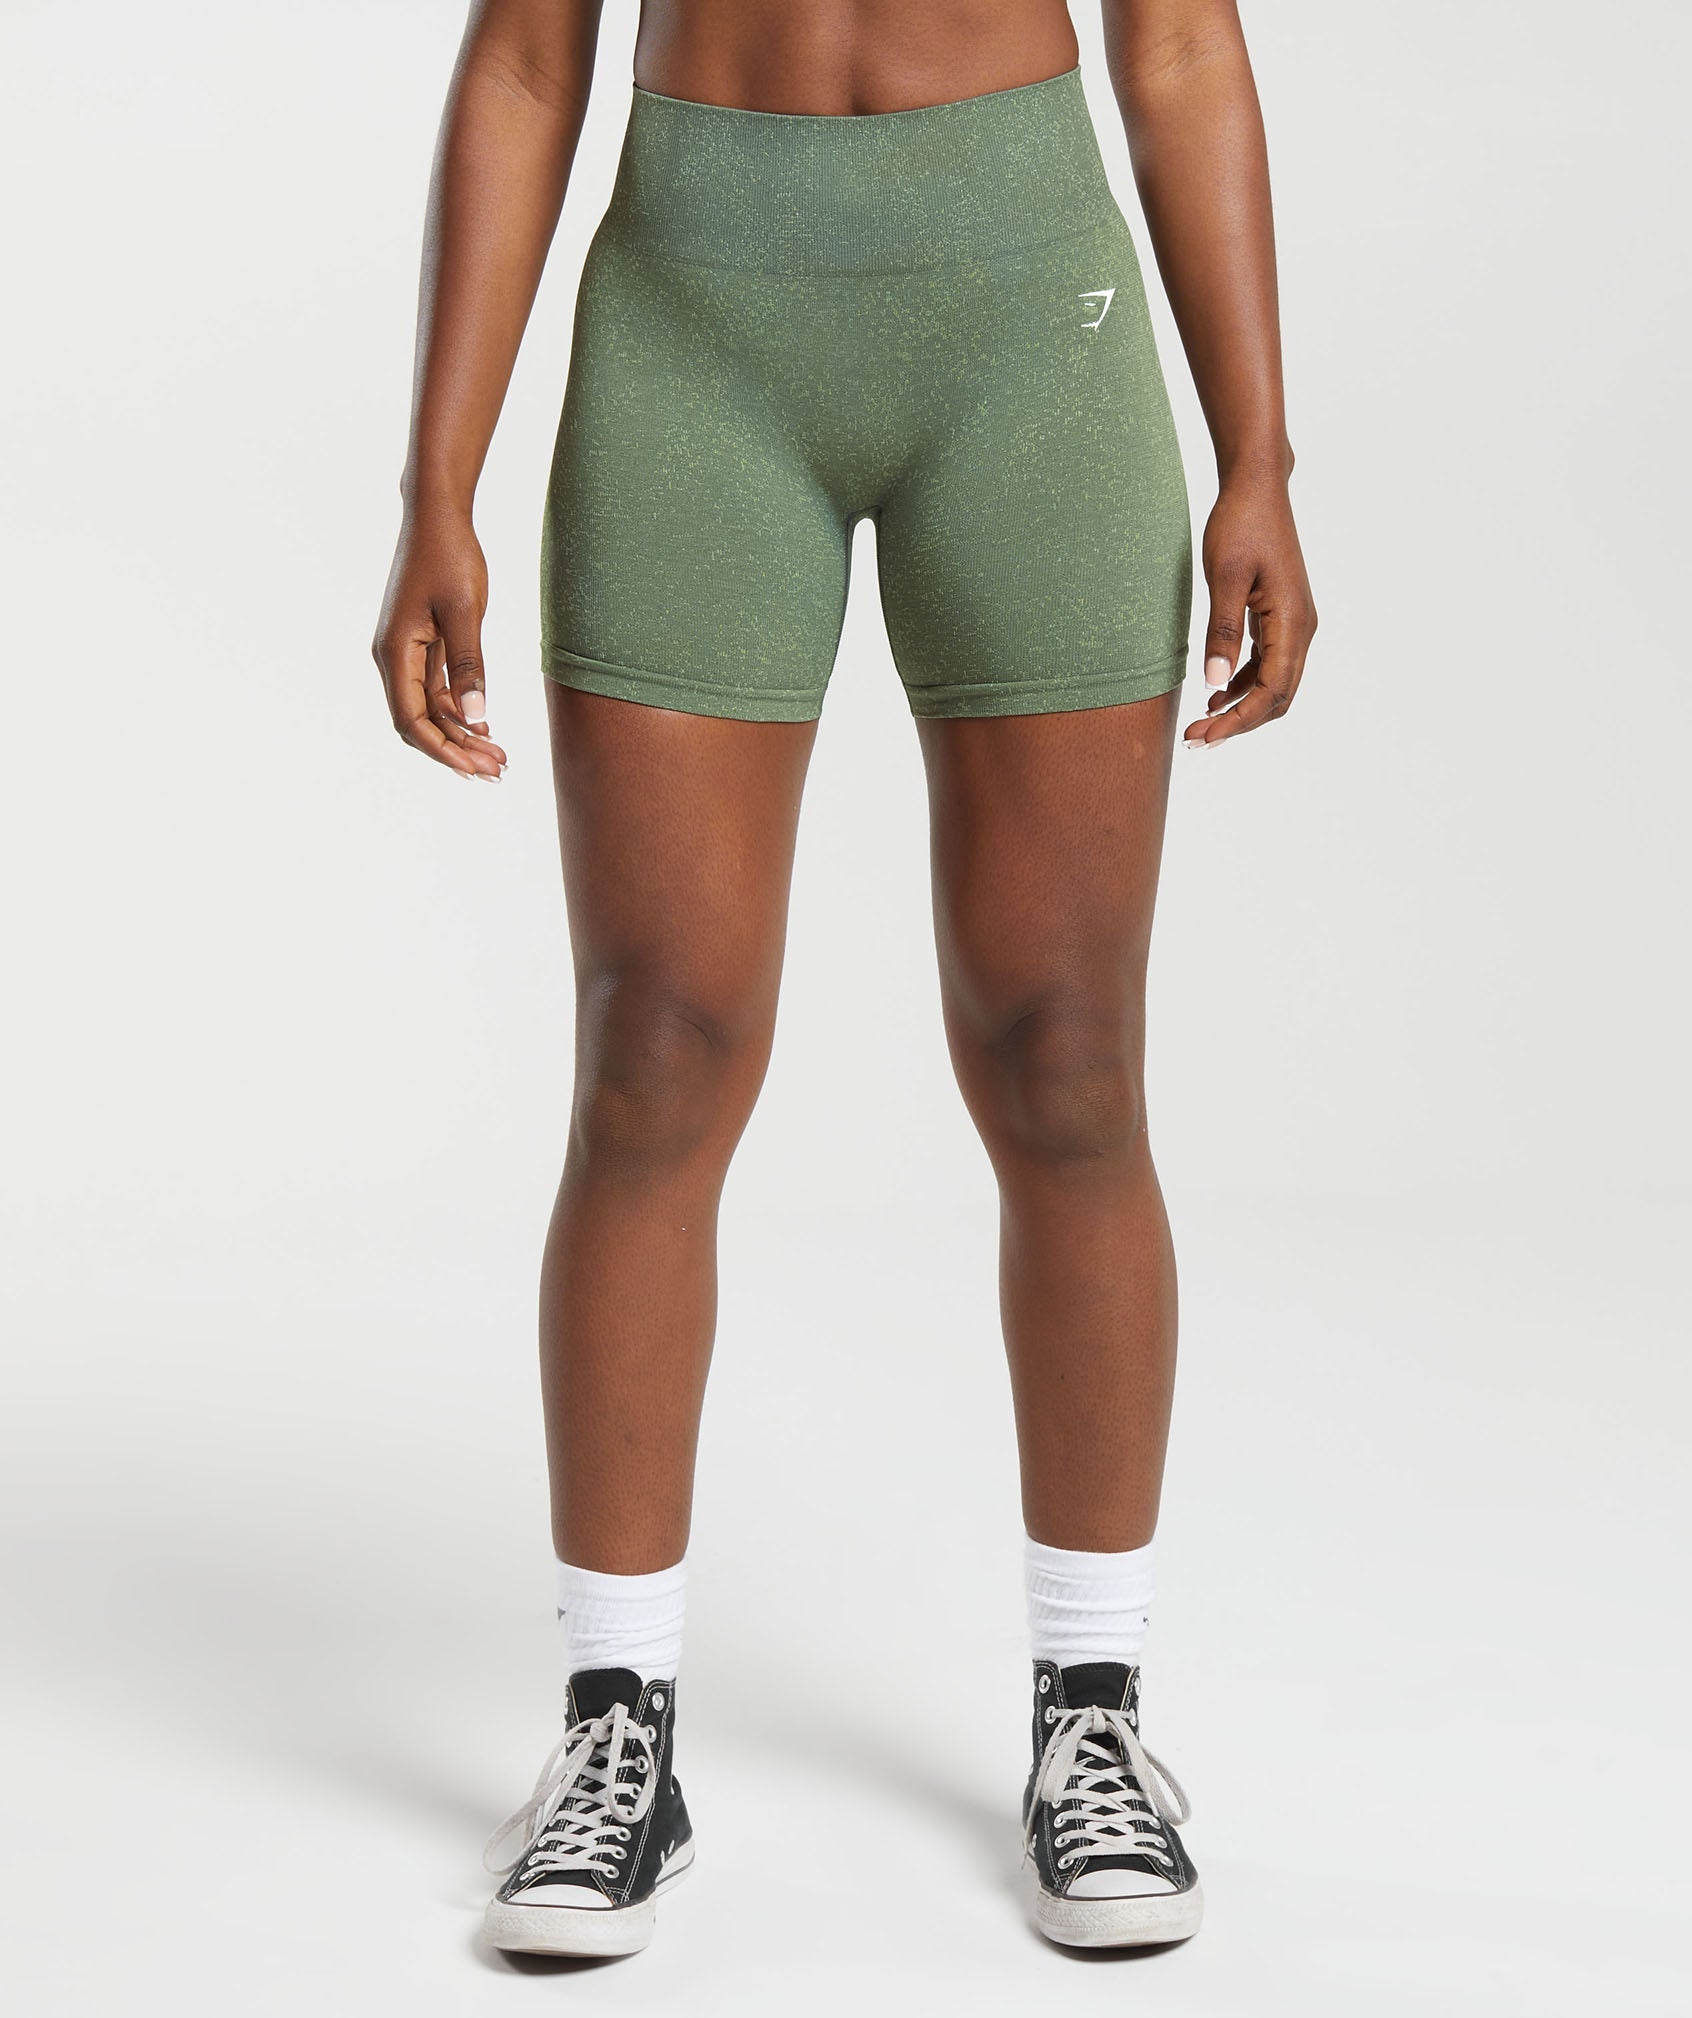 Adapt Fleck Seamless Shorts in Dusk Green/Light Sage Green